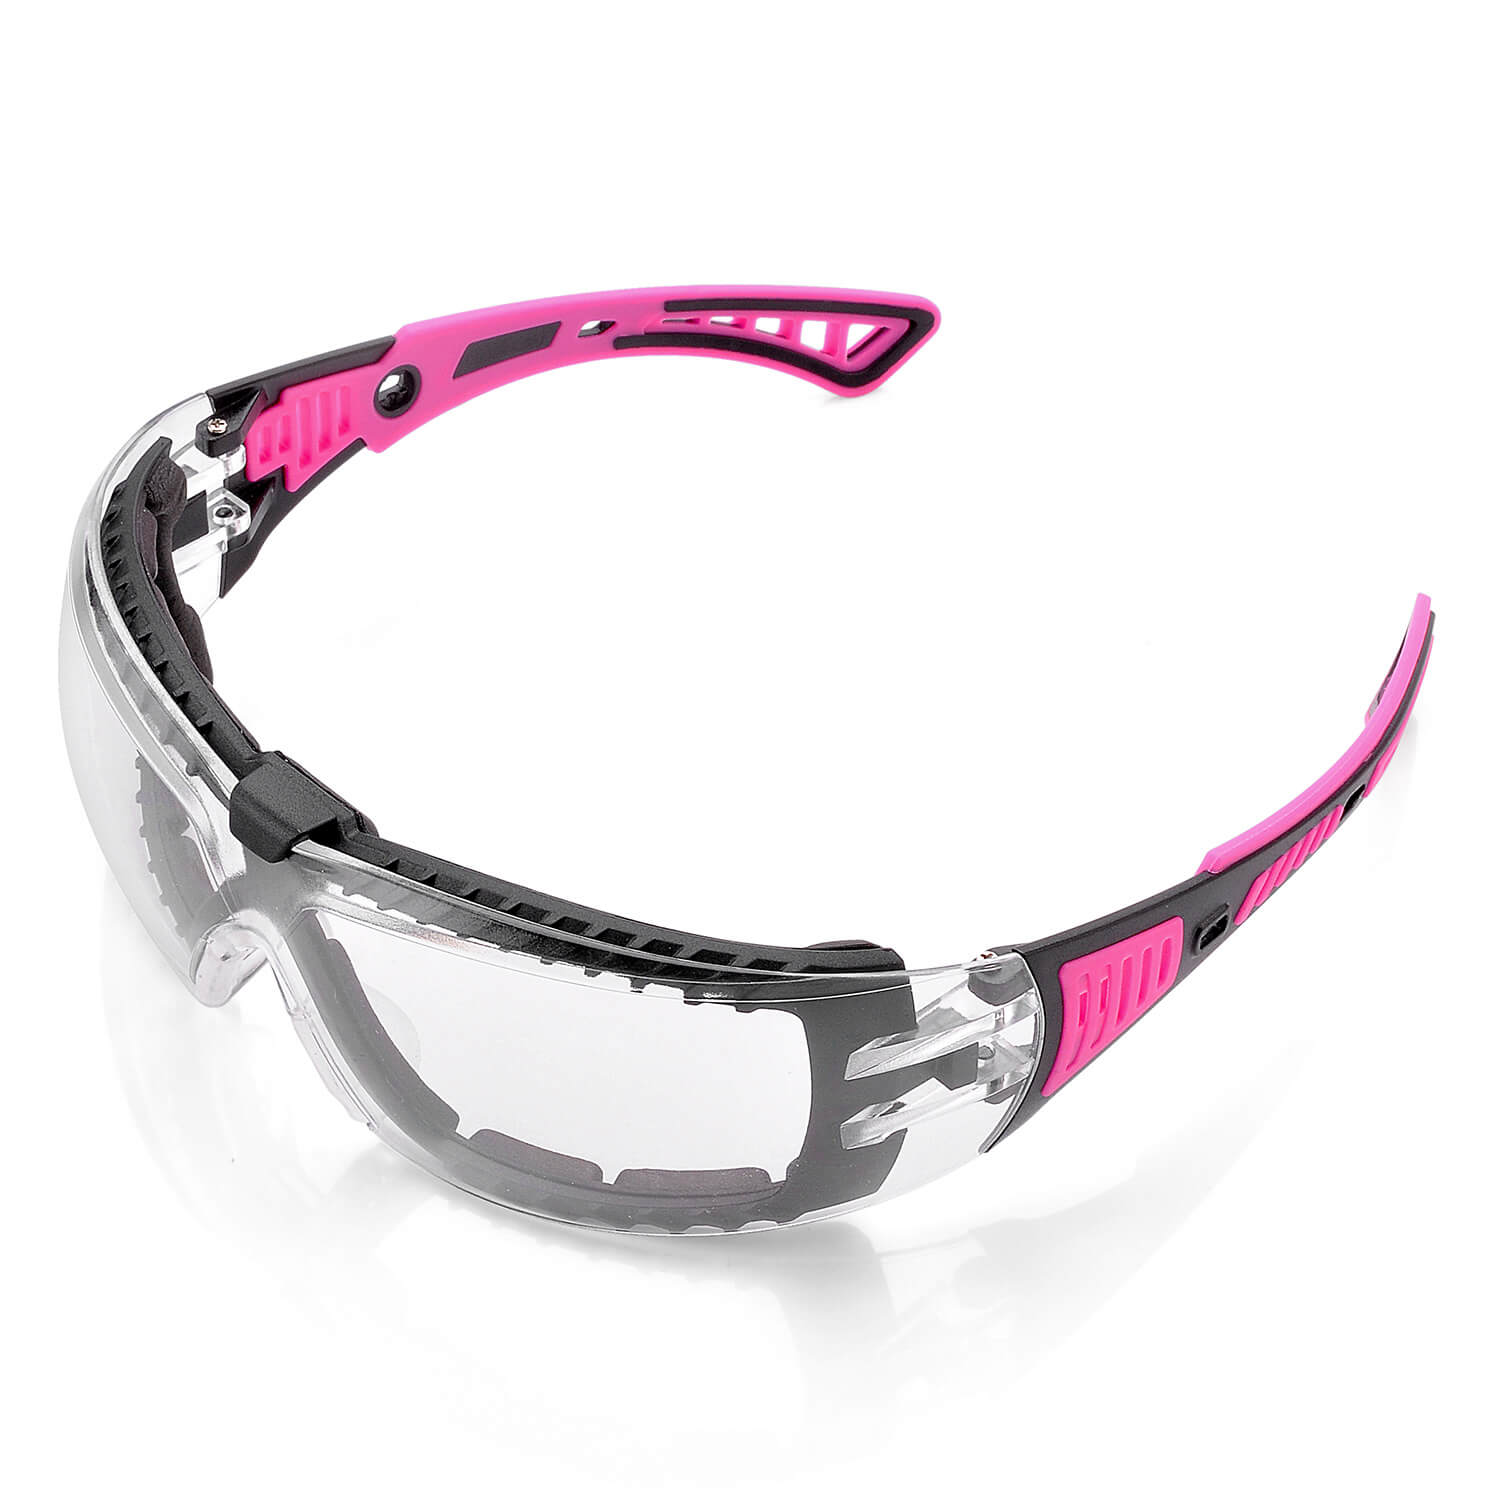 Safeyear Super Comfort Fogless Safety Glasses for Women, Z87.1 Approved